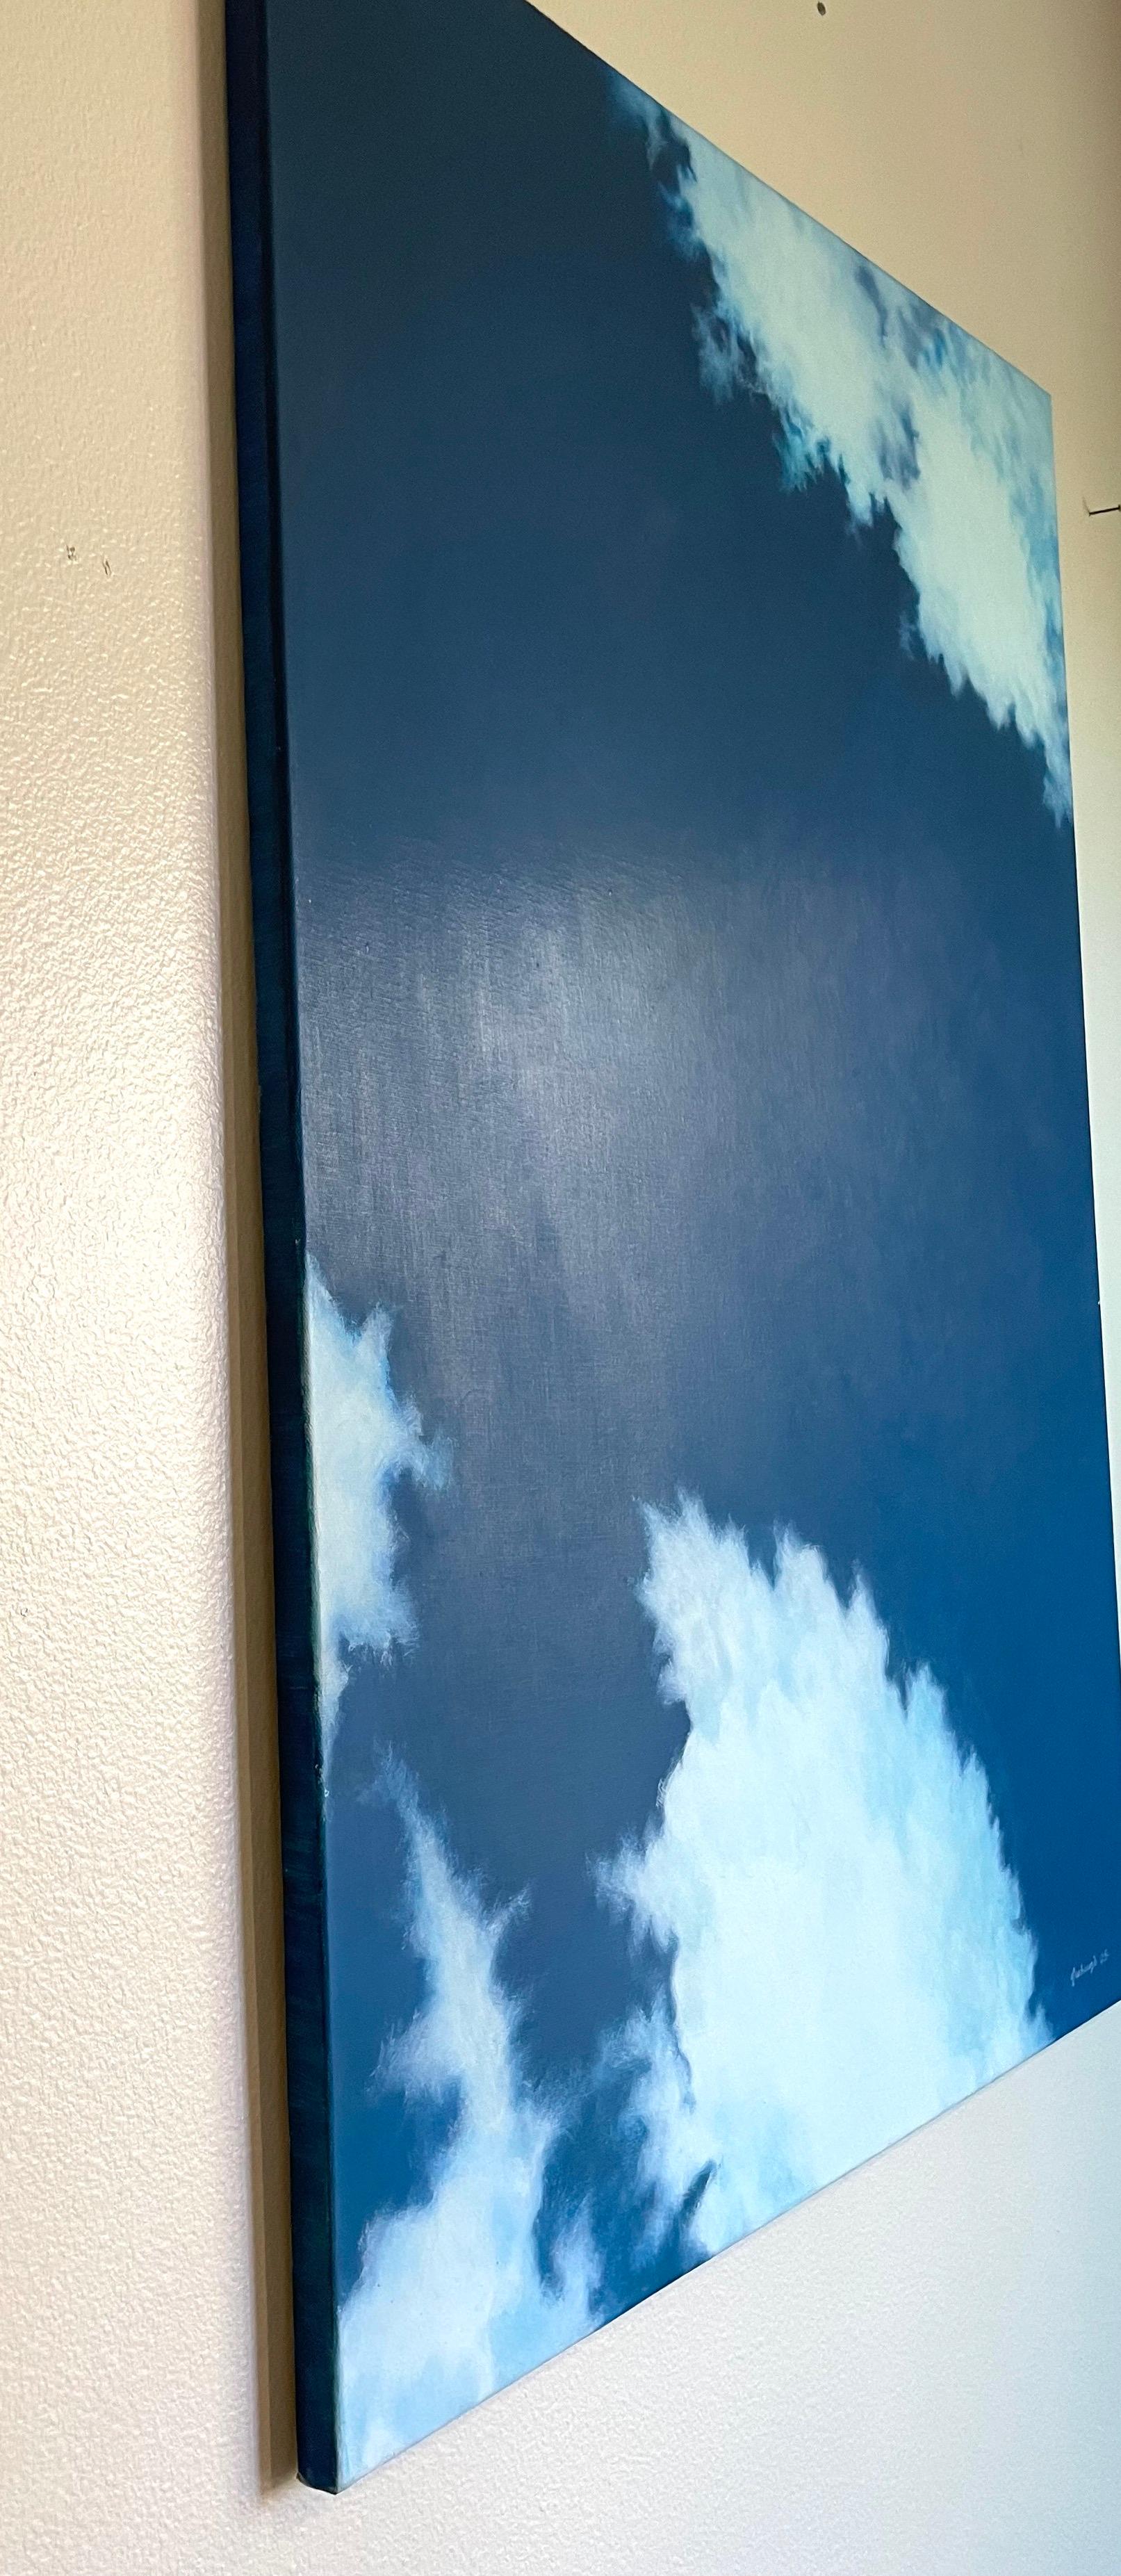 Artist: Vahagn Ghaltaghchyan
Work: Original oil painting, handmade artwork, one of a kind 
Medium: Oil on Canvas
Style: Abstract Art
Year: 2023
Title: Blue Sky
Size: 40